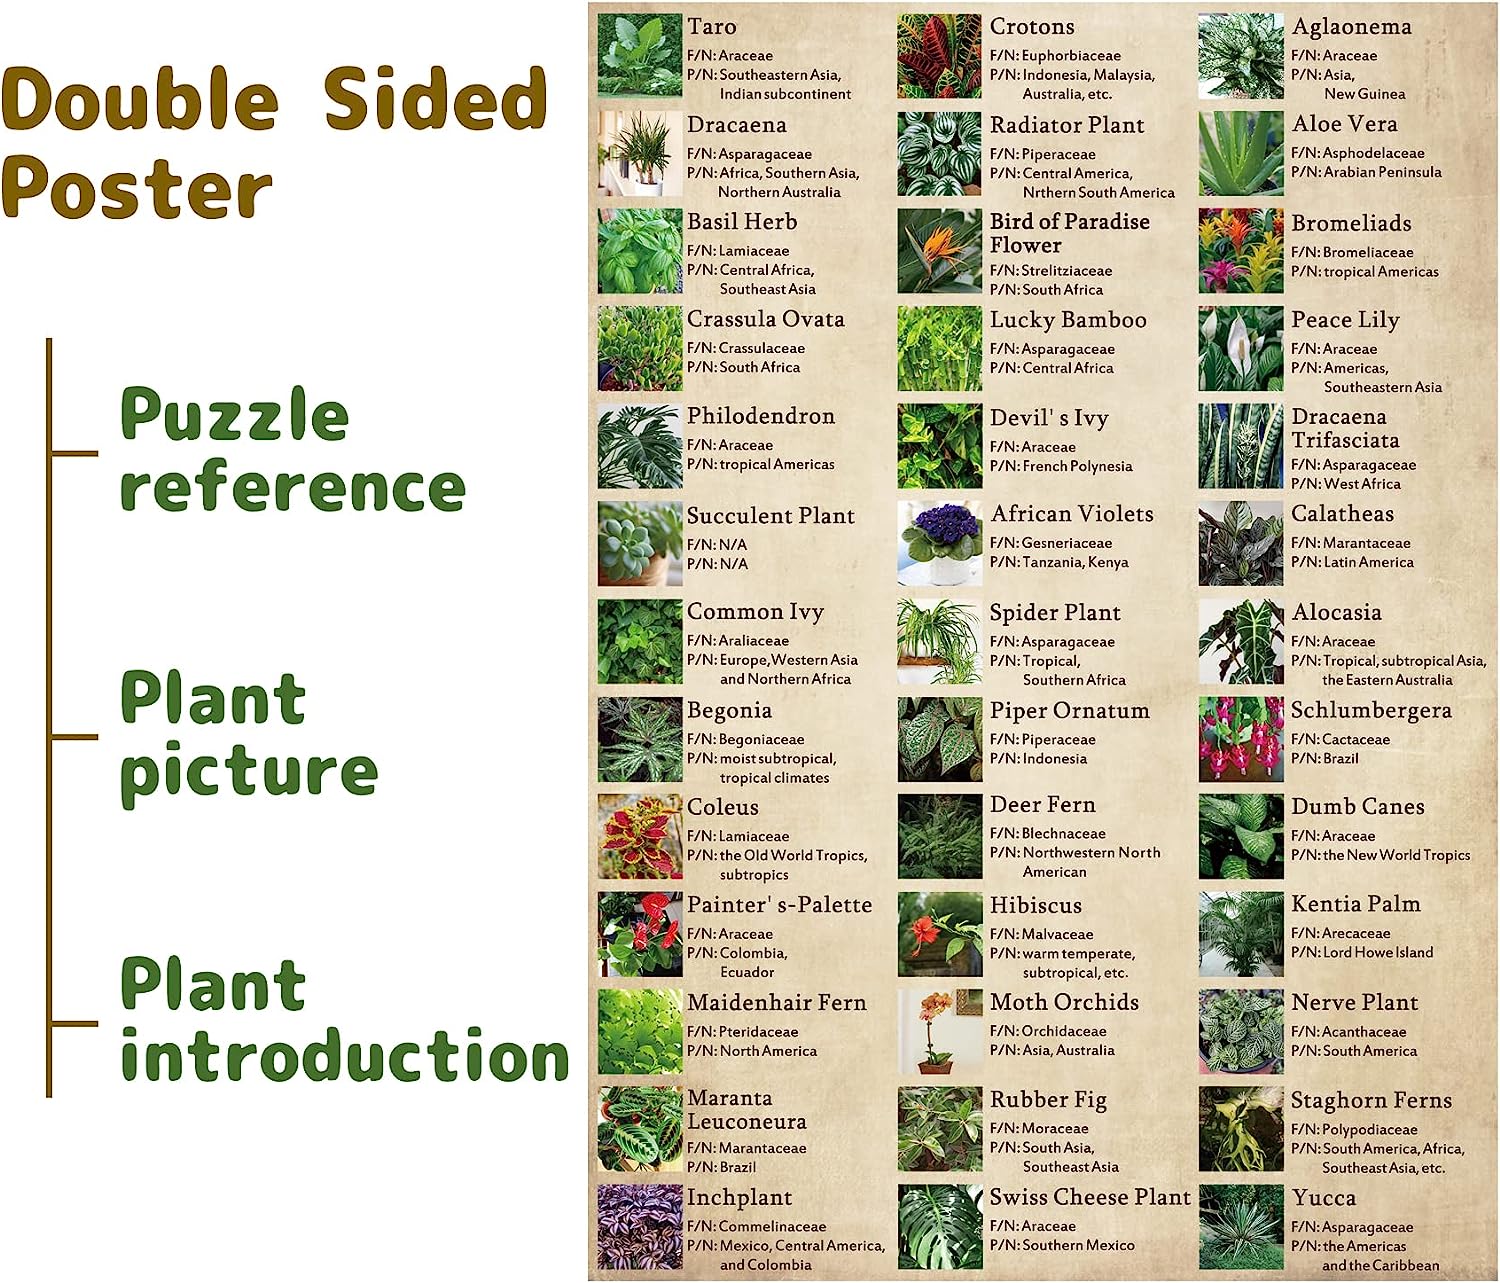 Pickforu® Botany Succulent House Plant Jigsaw Puzzle 1000 Pieces